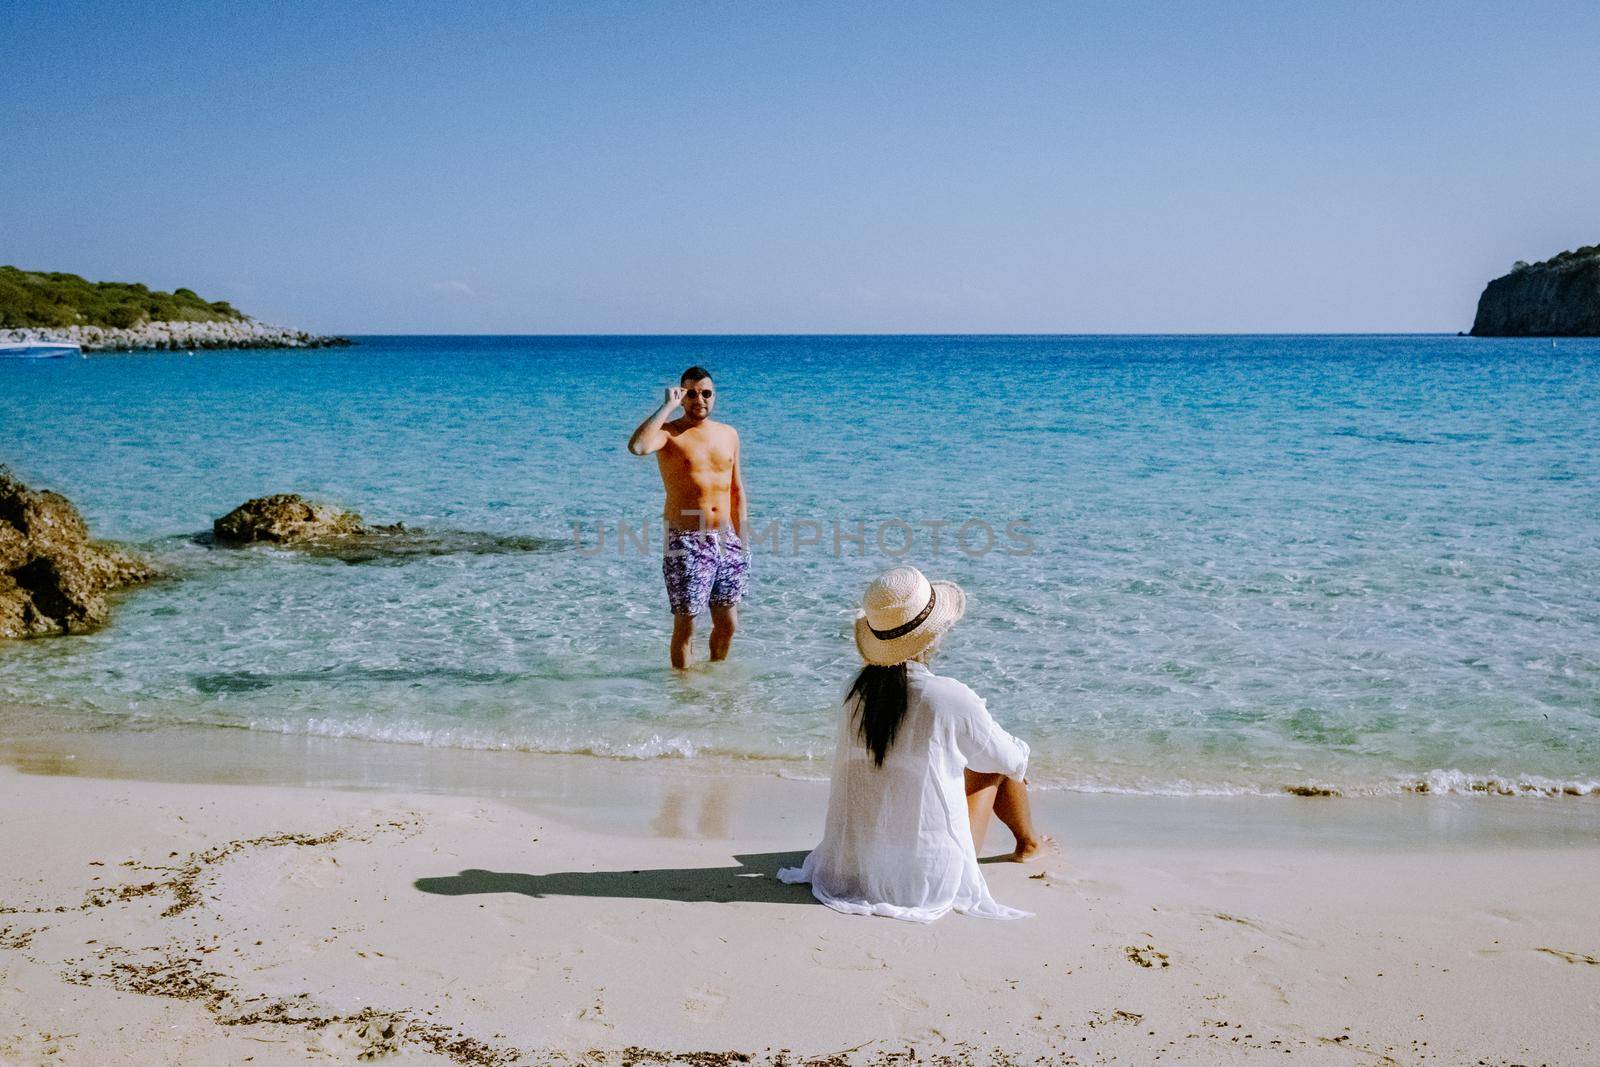 Young happy couple on seashore Crete Greece, men, and woman Voulisma beach Crete Greece. Europe